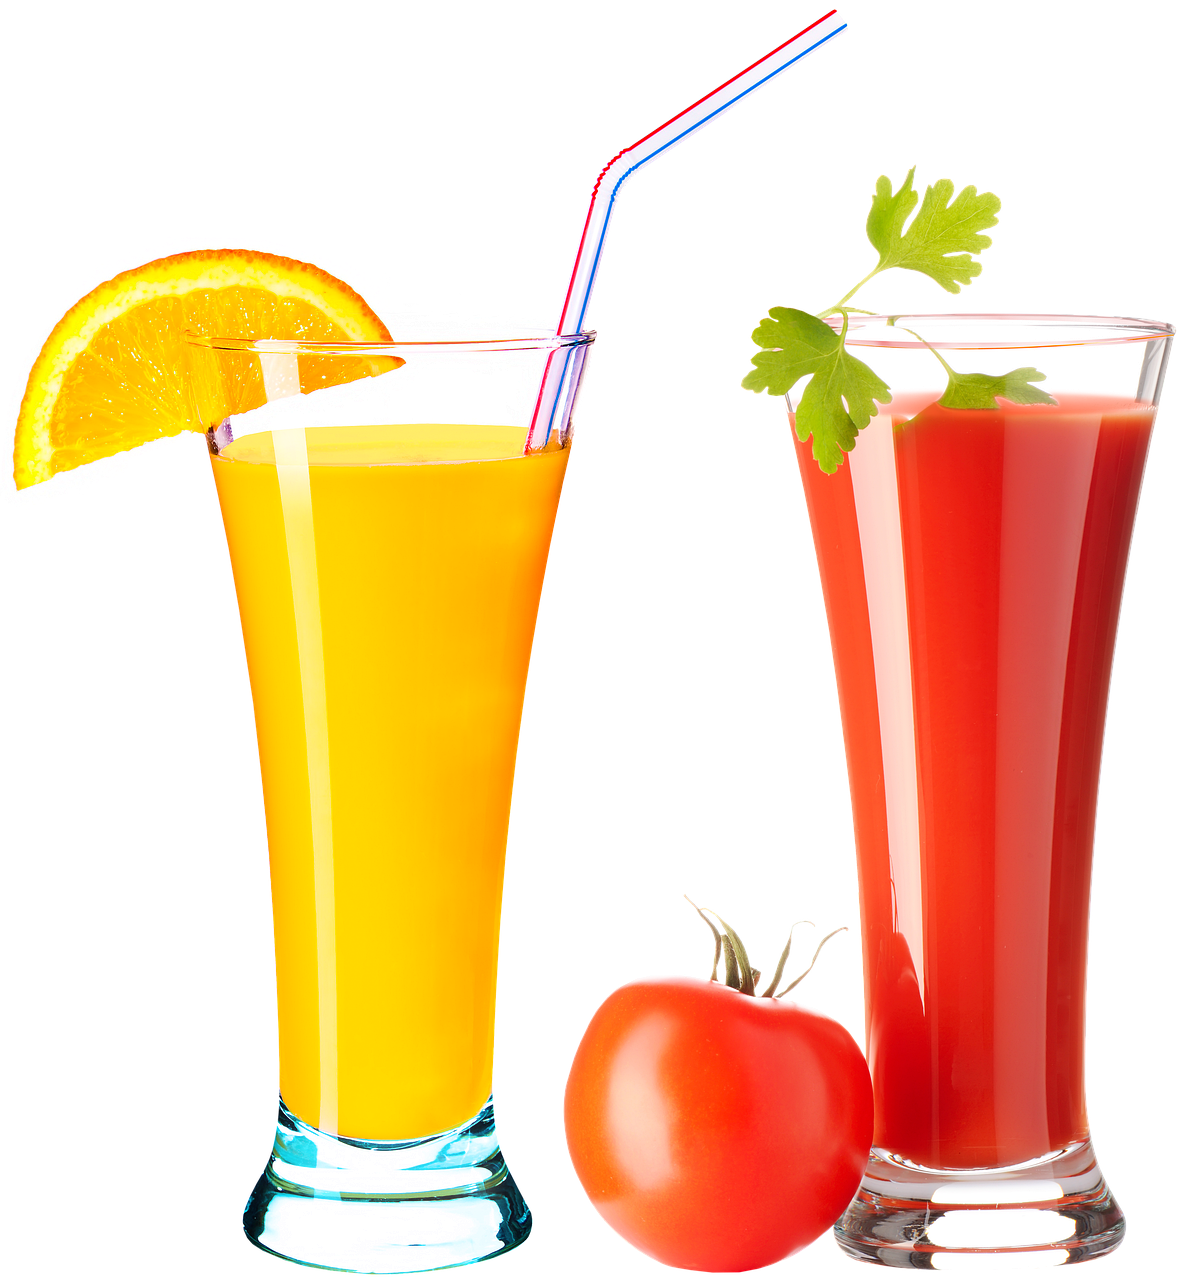 Apple Juice Or Orange Juice Which is More Healthier